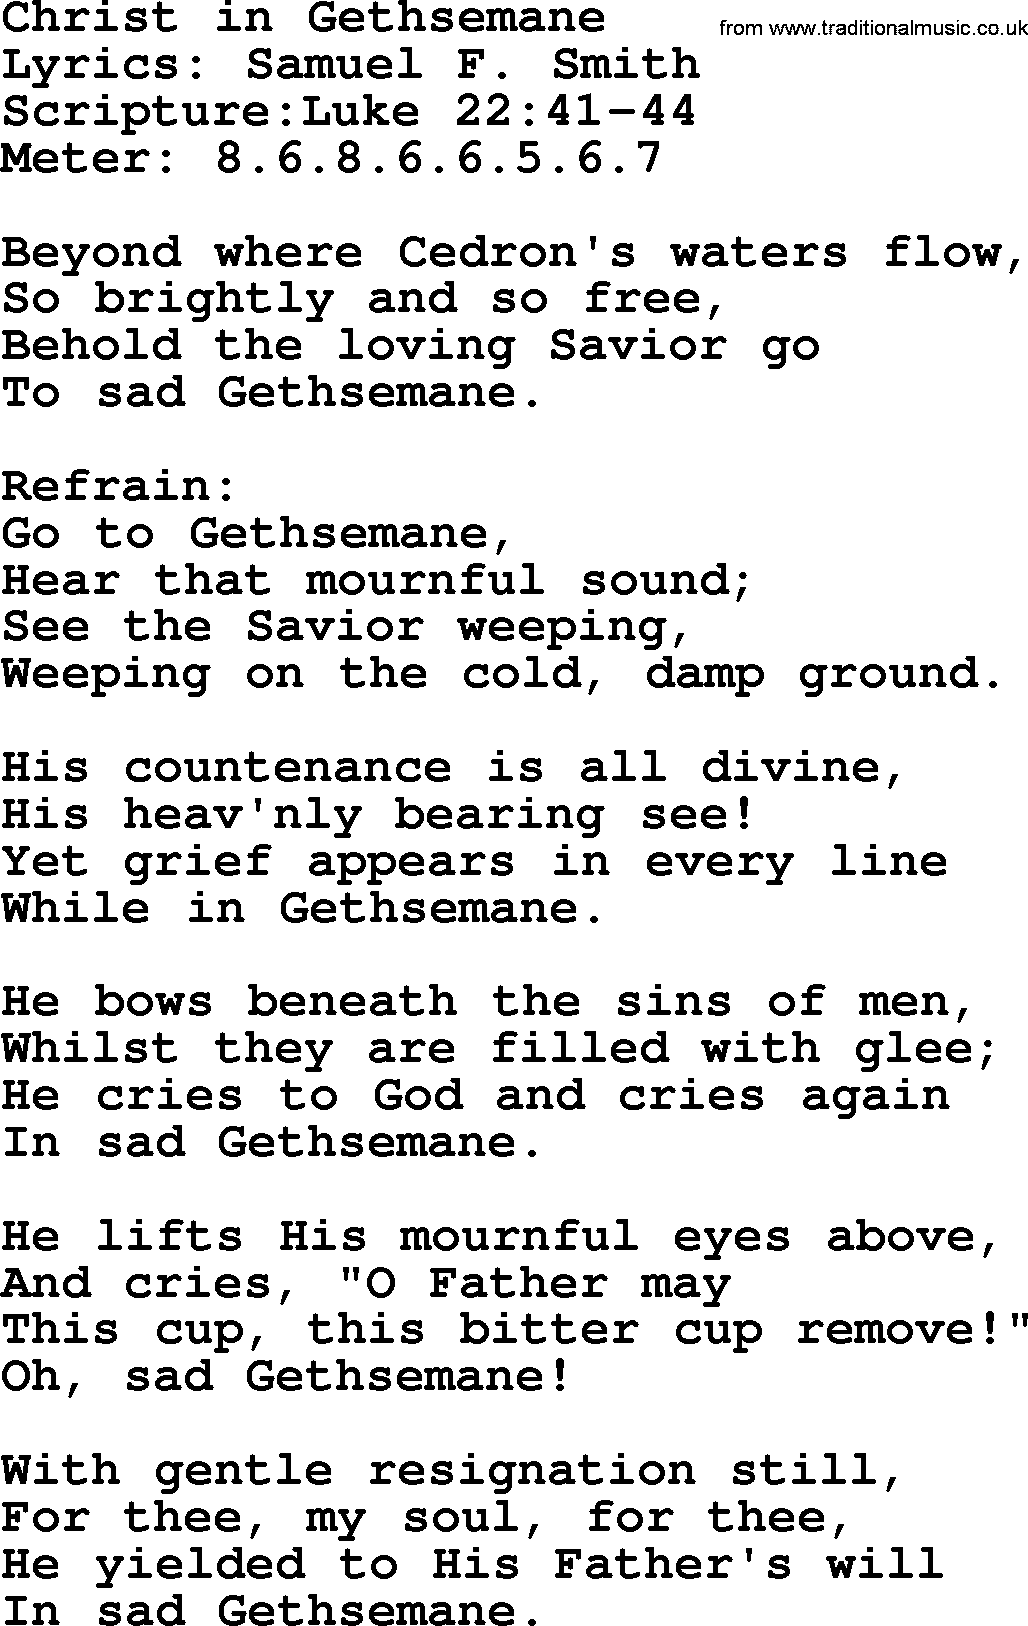 Hymns about  Angels, Hymn: Christ in Gethsemane, lyrics, sheet music, midi & Mp3 music with PDF